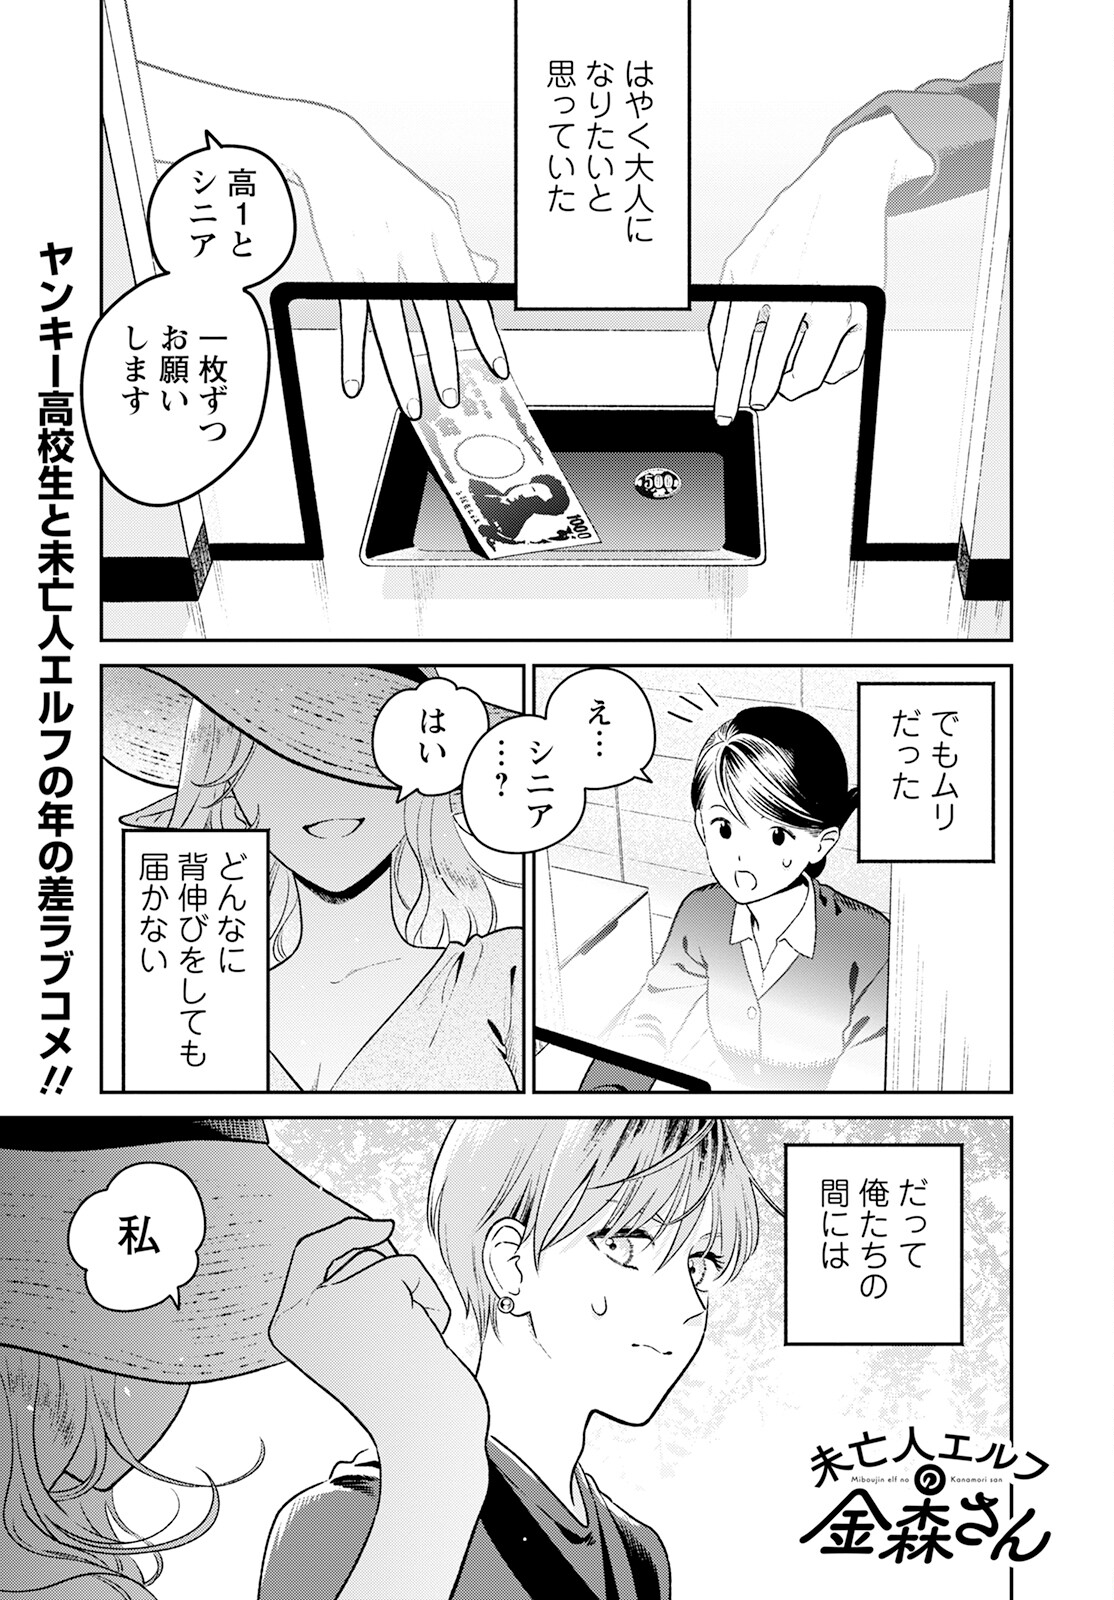 Miboujin Elf no Kanamori-san - Chapter 2 - Page 1